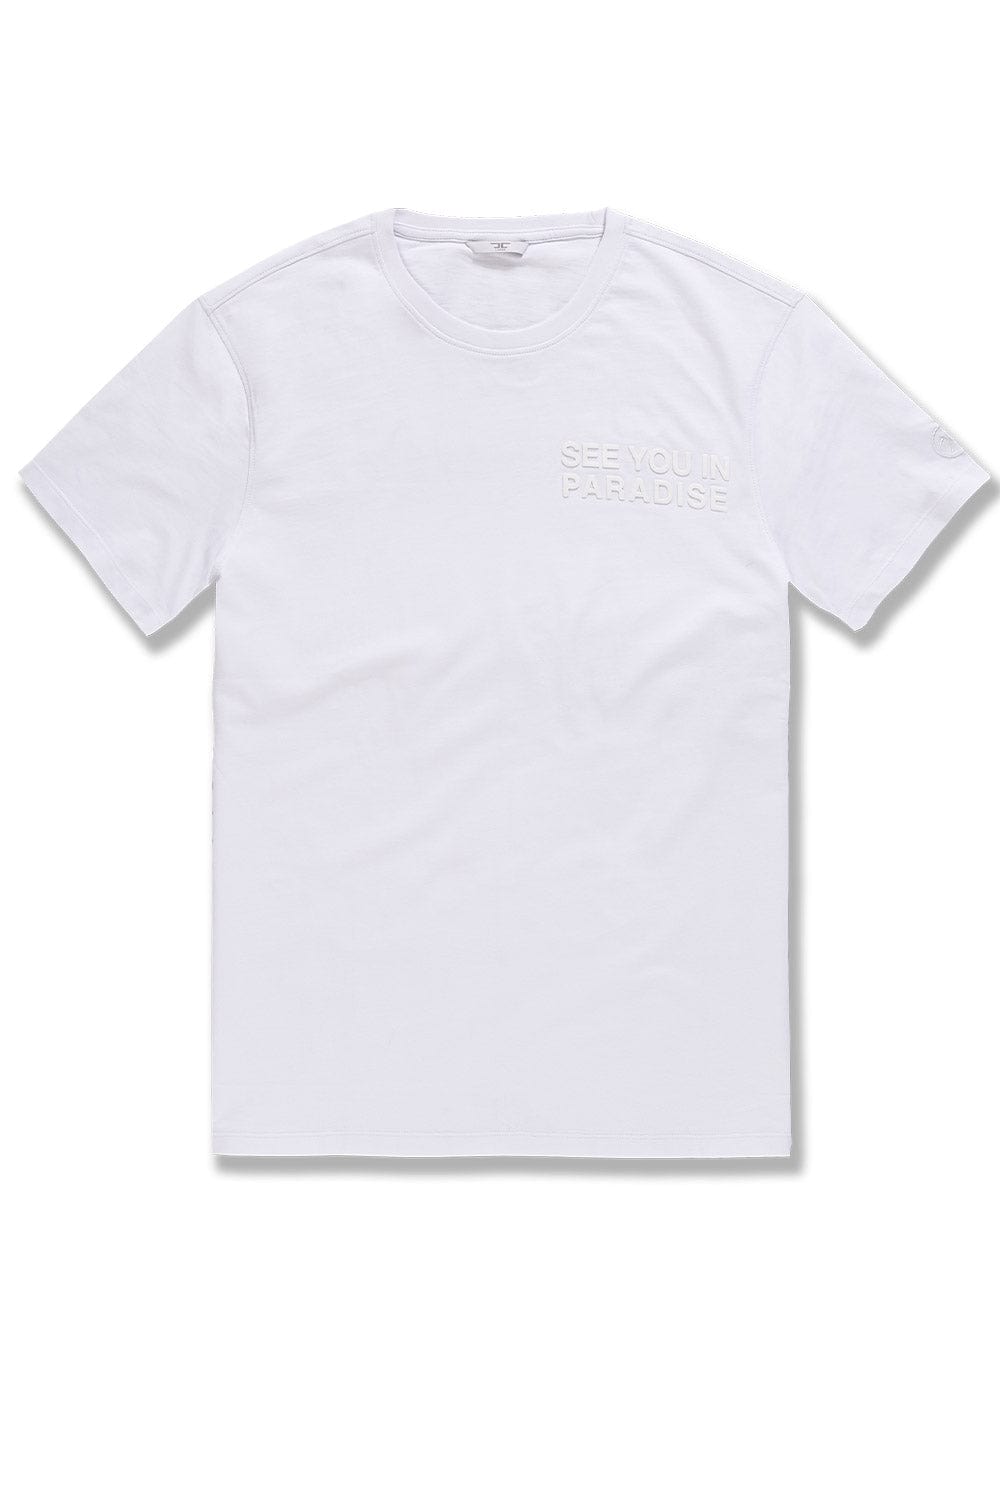 Jordan Craig Paradise Tonal T-Shirt White / S